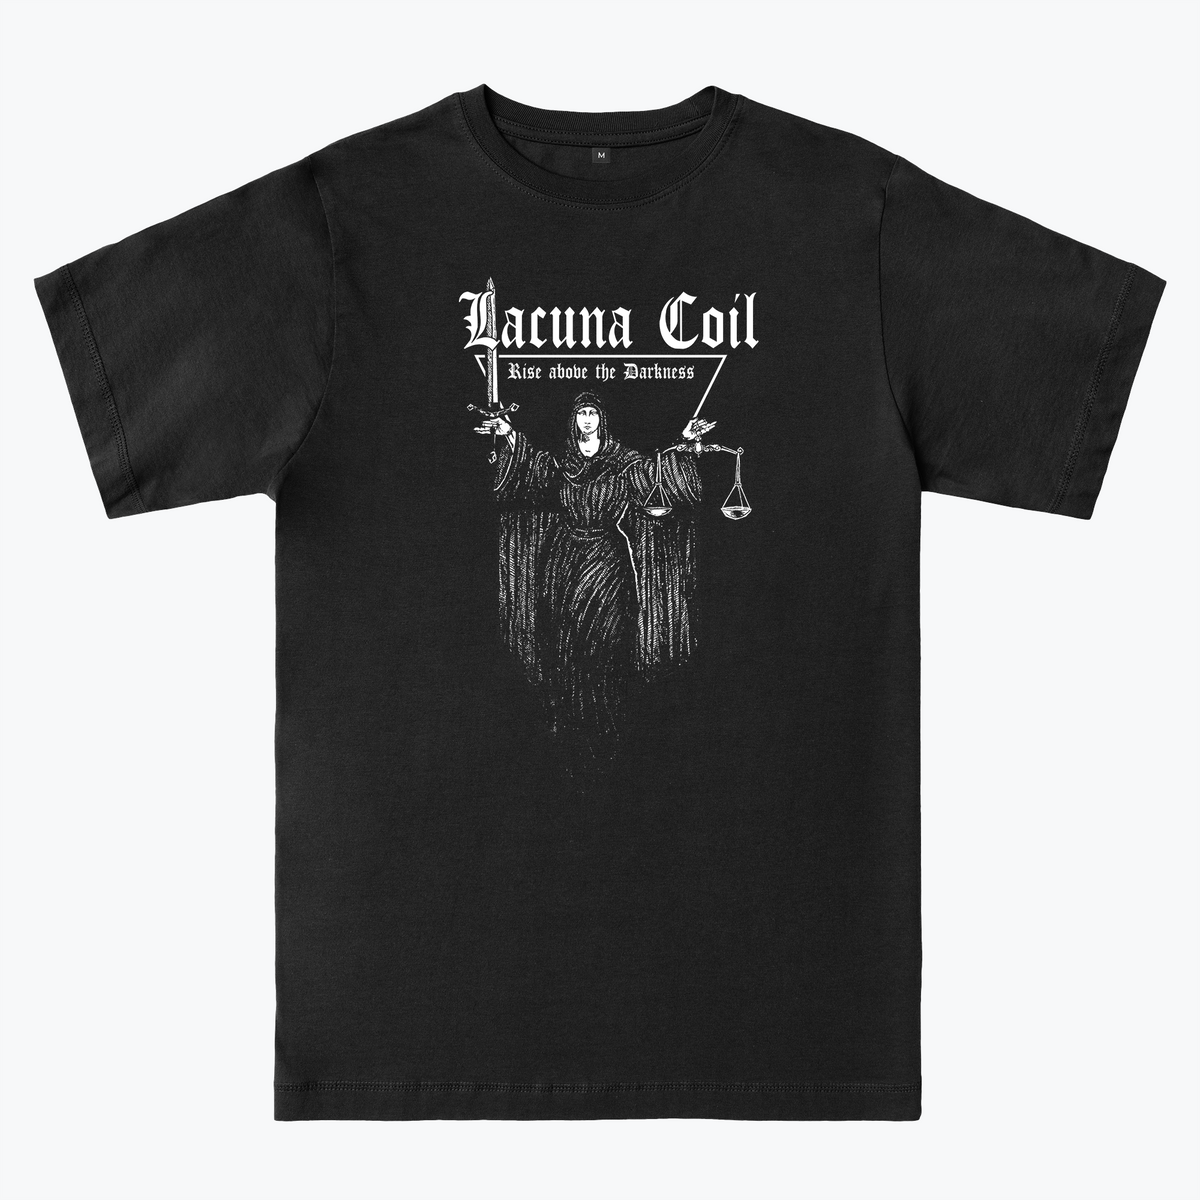 Lacuna Coil T-shirt | Merch for Good